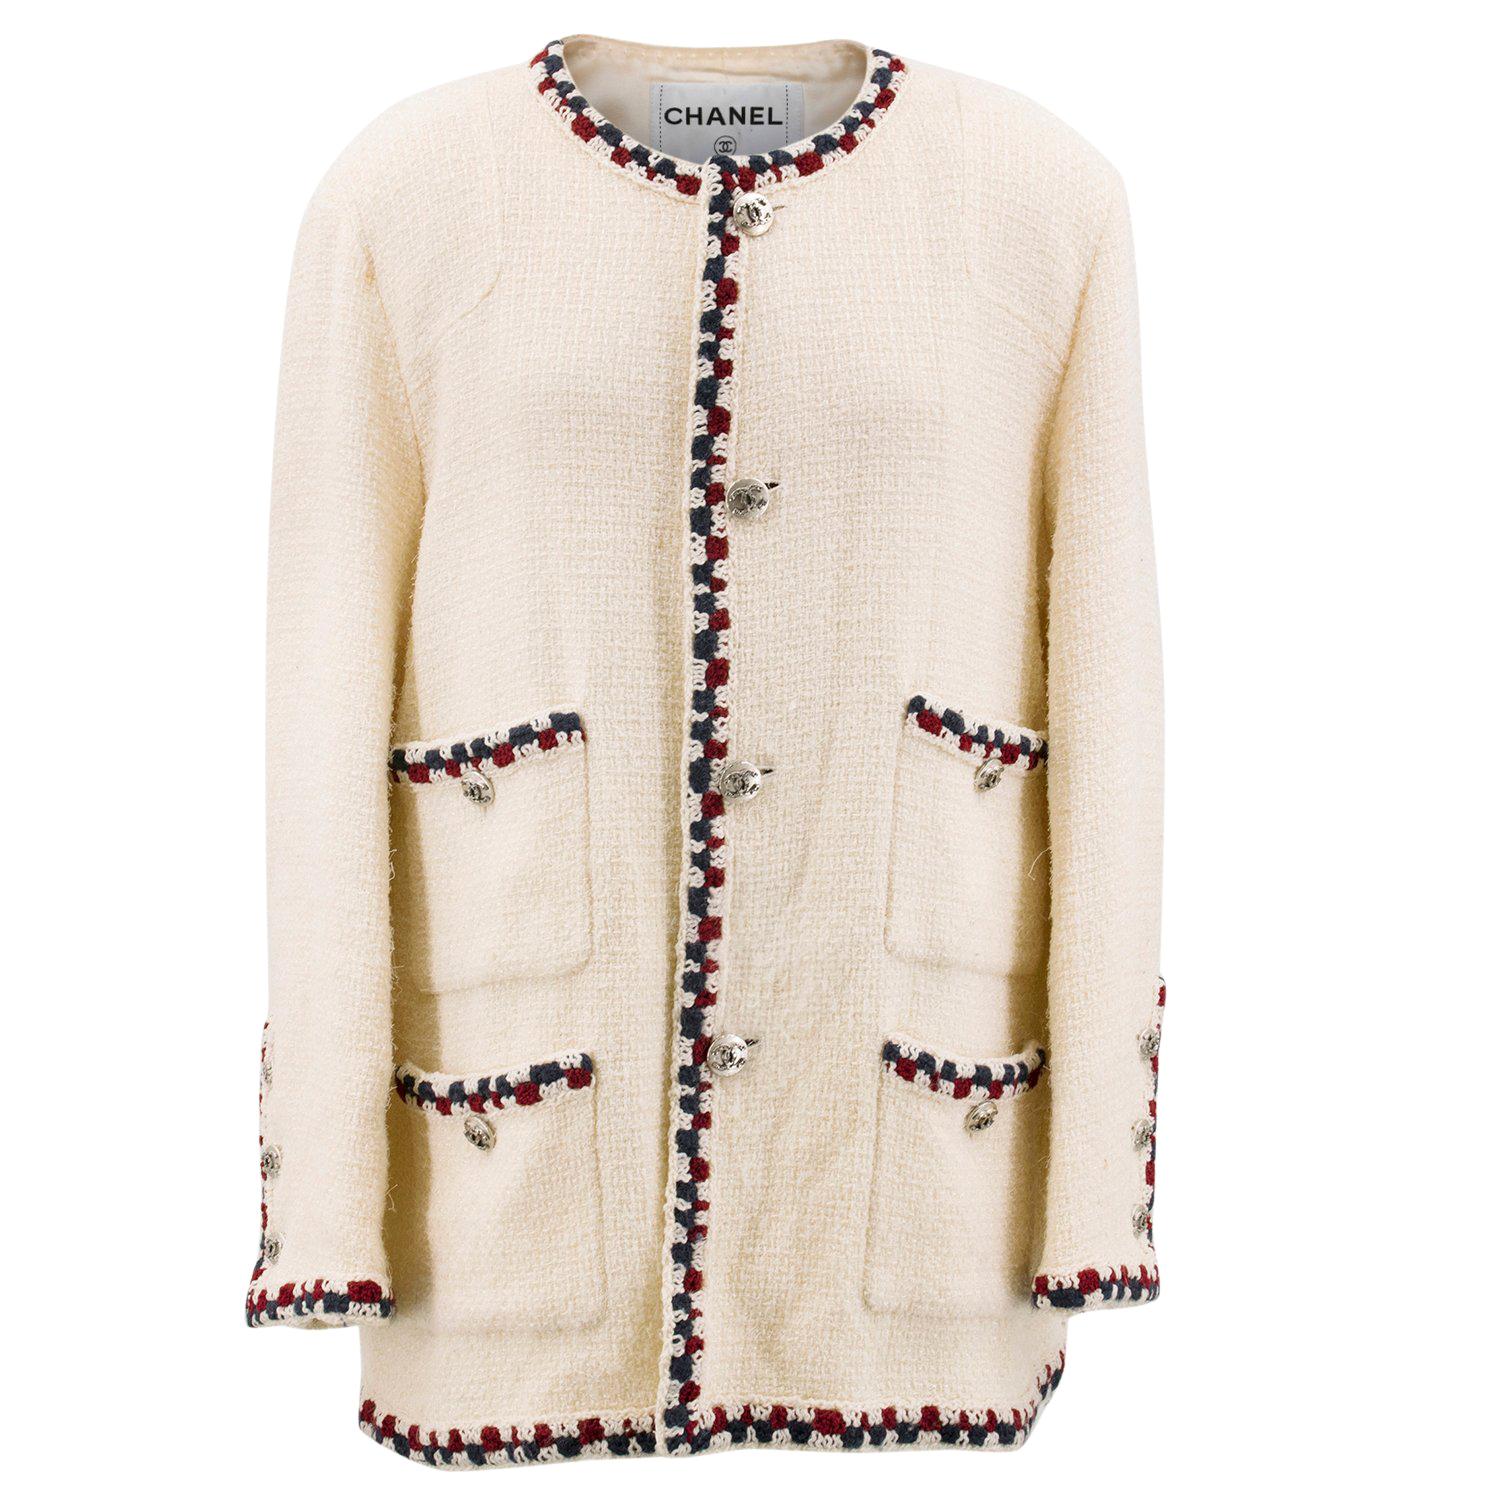 Chanel Wool Tweed Jacket SIZE US 14/FR 54/UK 18